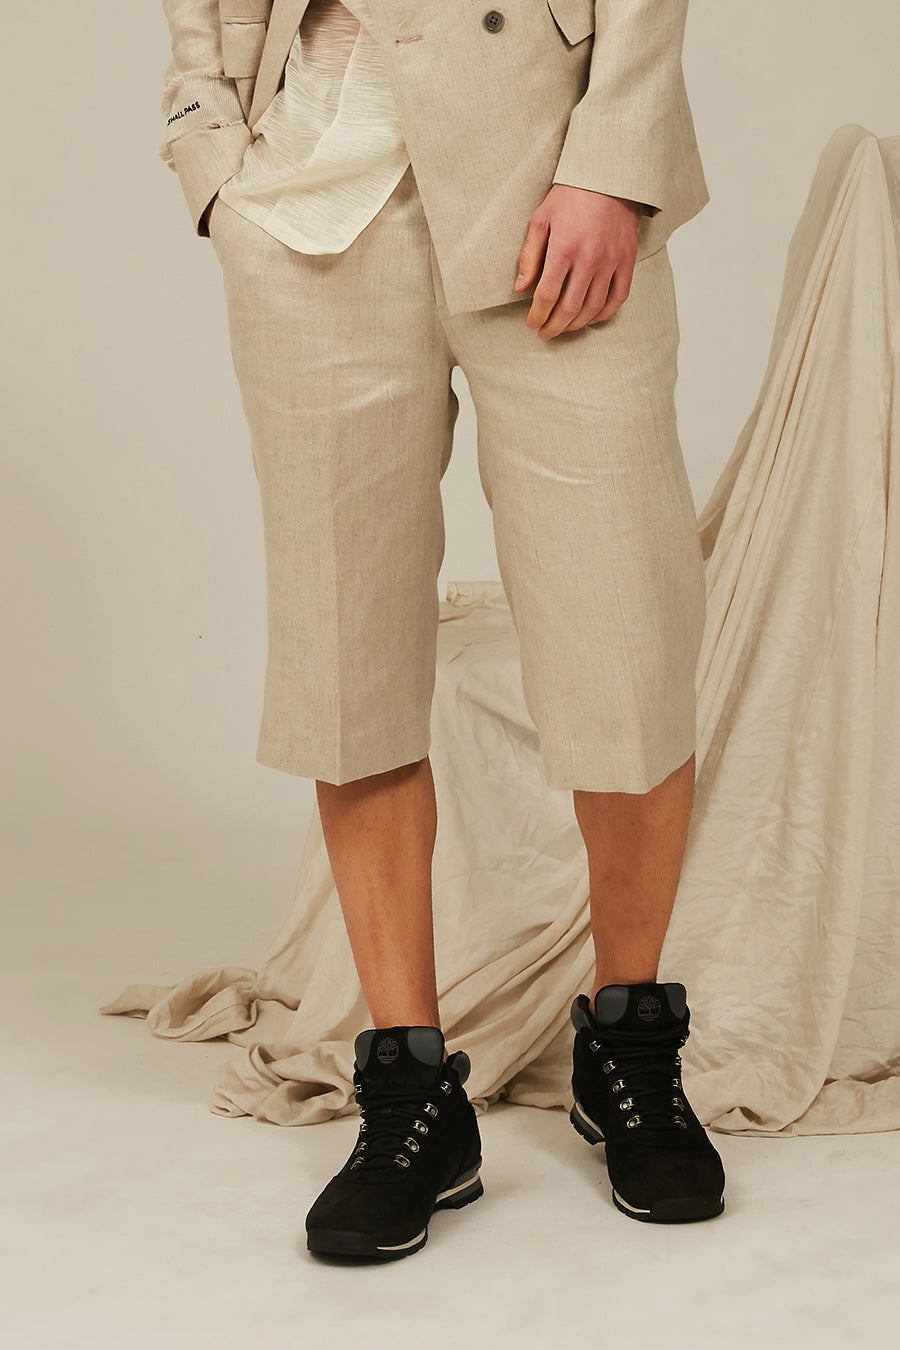 construct linen shorts for men